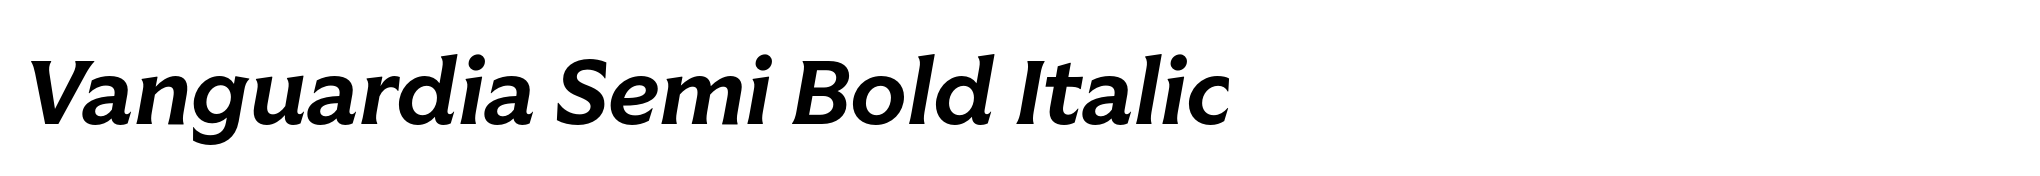 Vanguardia Semi Bold Italic image